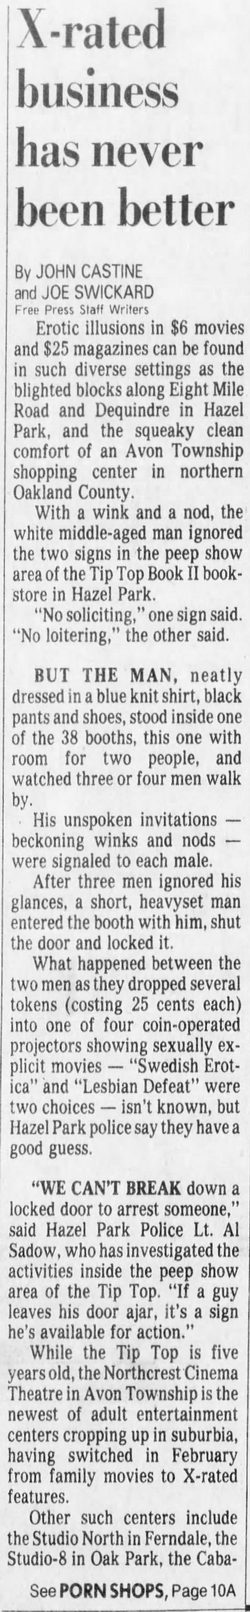 Northcrest Cinema - May 1980 Article